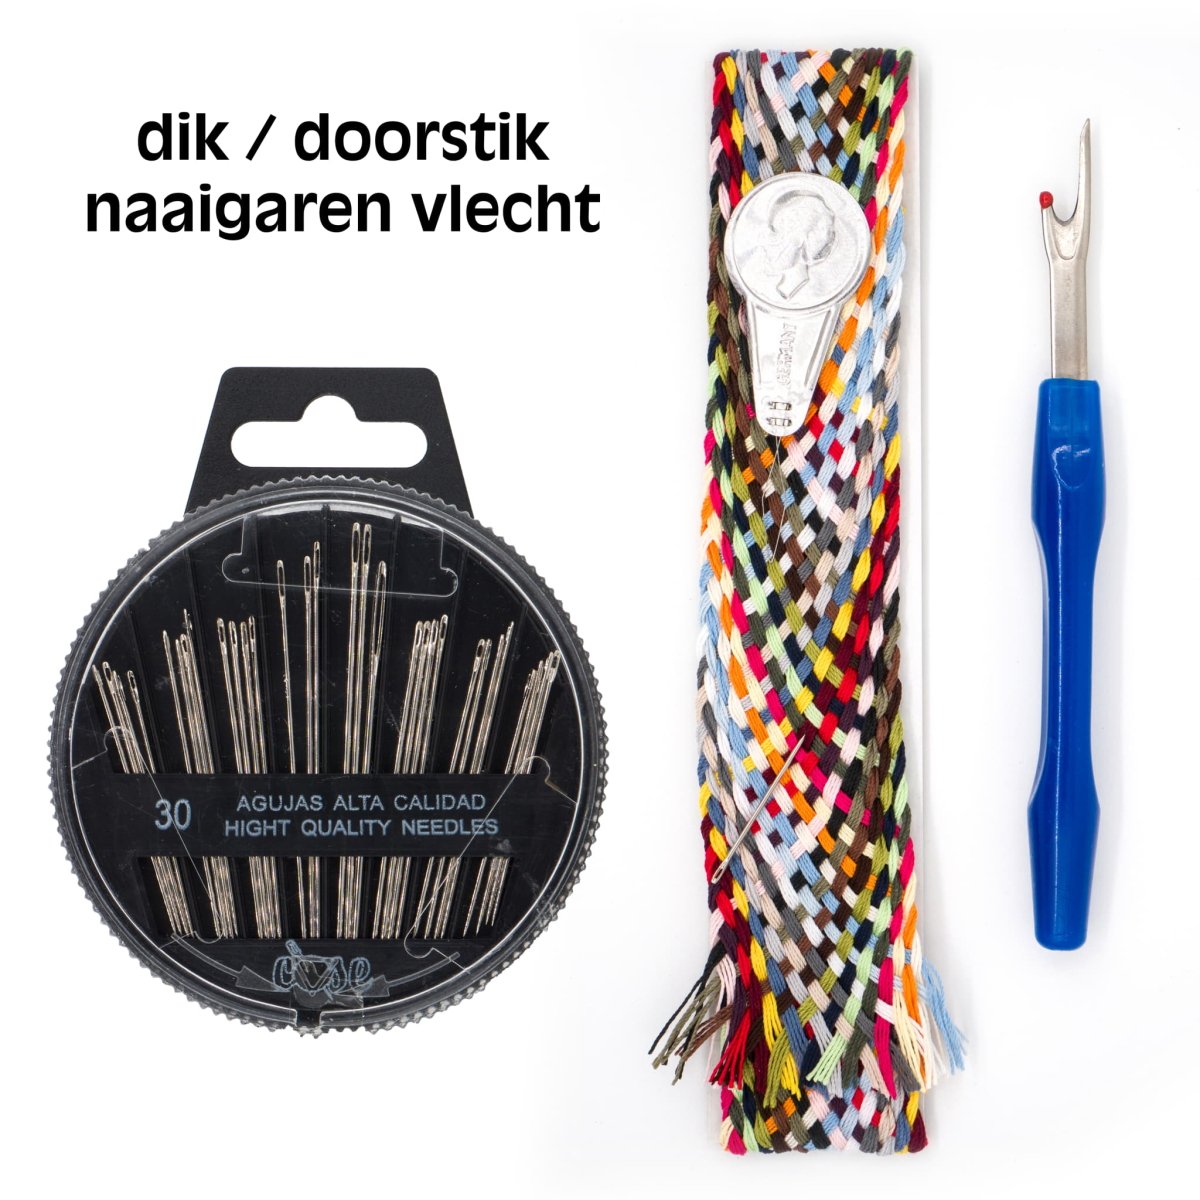 Gütermann Naaigaren vlecht met dik naaigaren - set naaigaren vlecht NGV-DIK-Set - Fourniturenkraam.nl